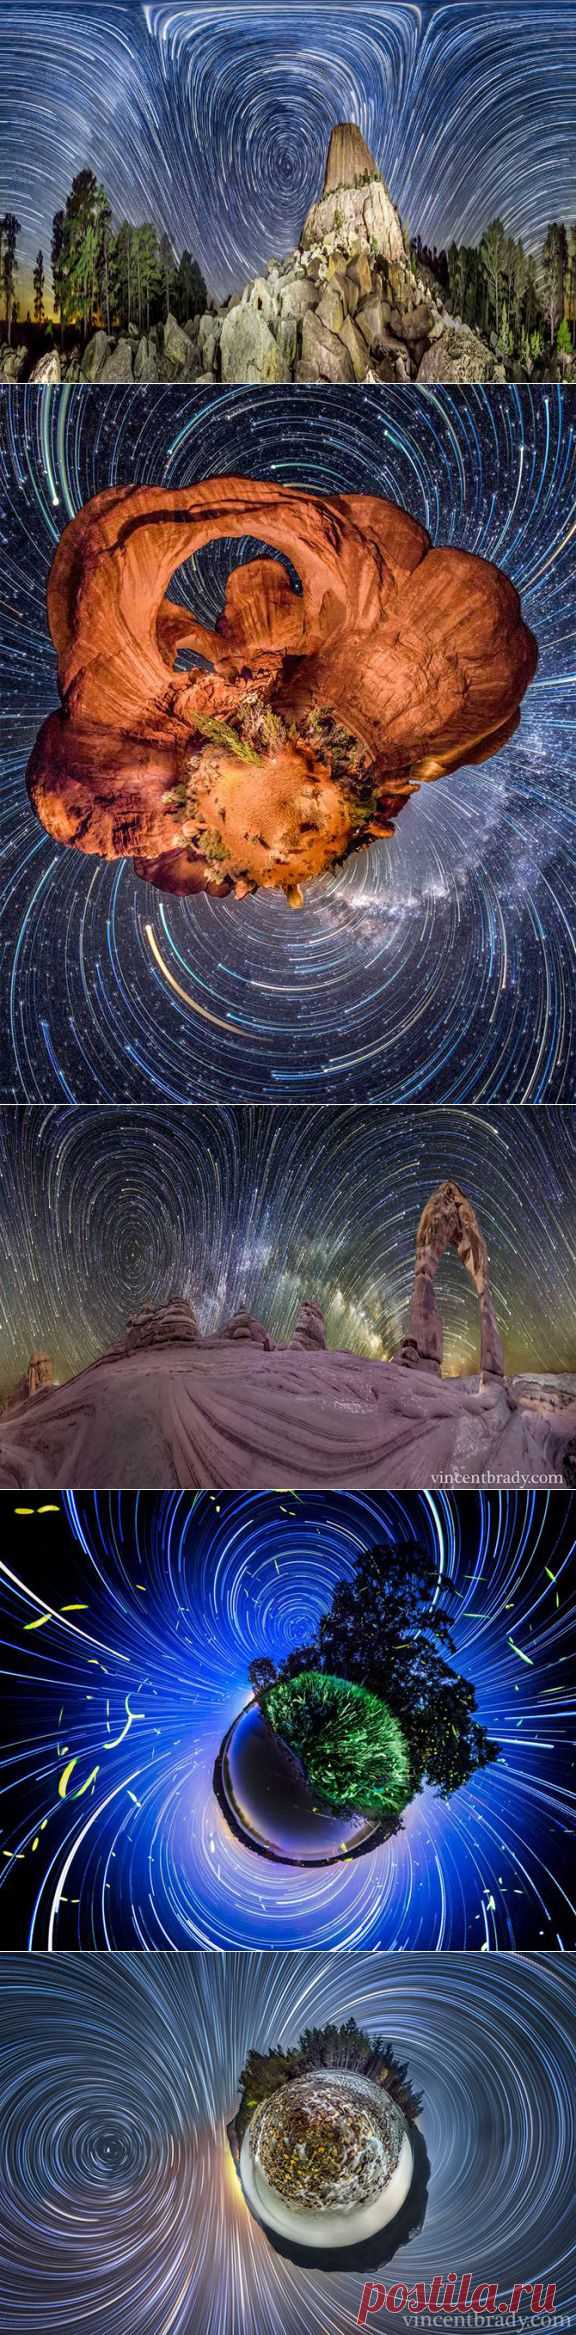 Звездное небо. Фотограф Винсент Бреди | Фотоискусство